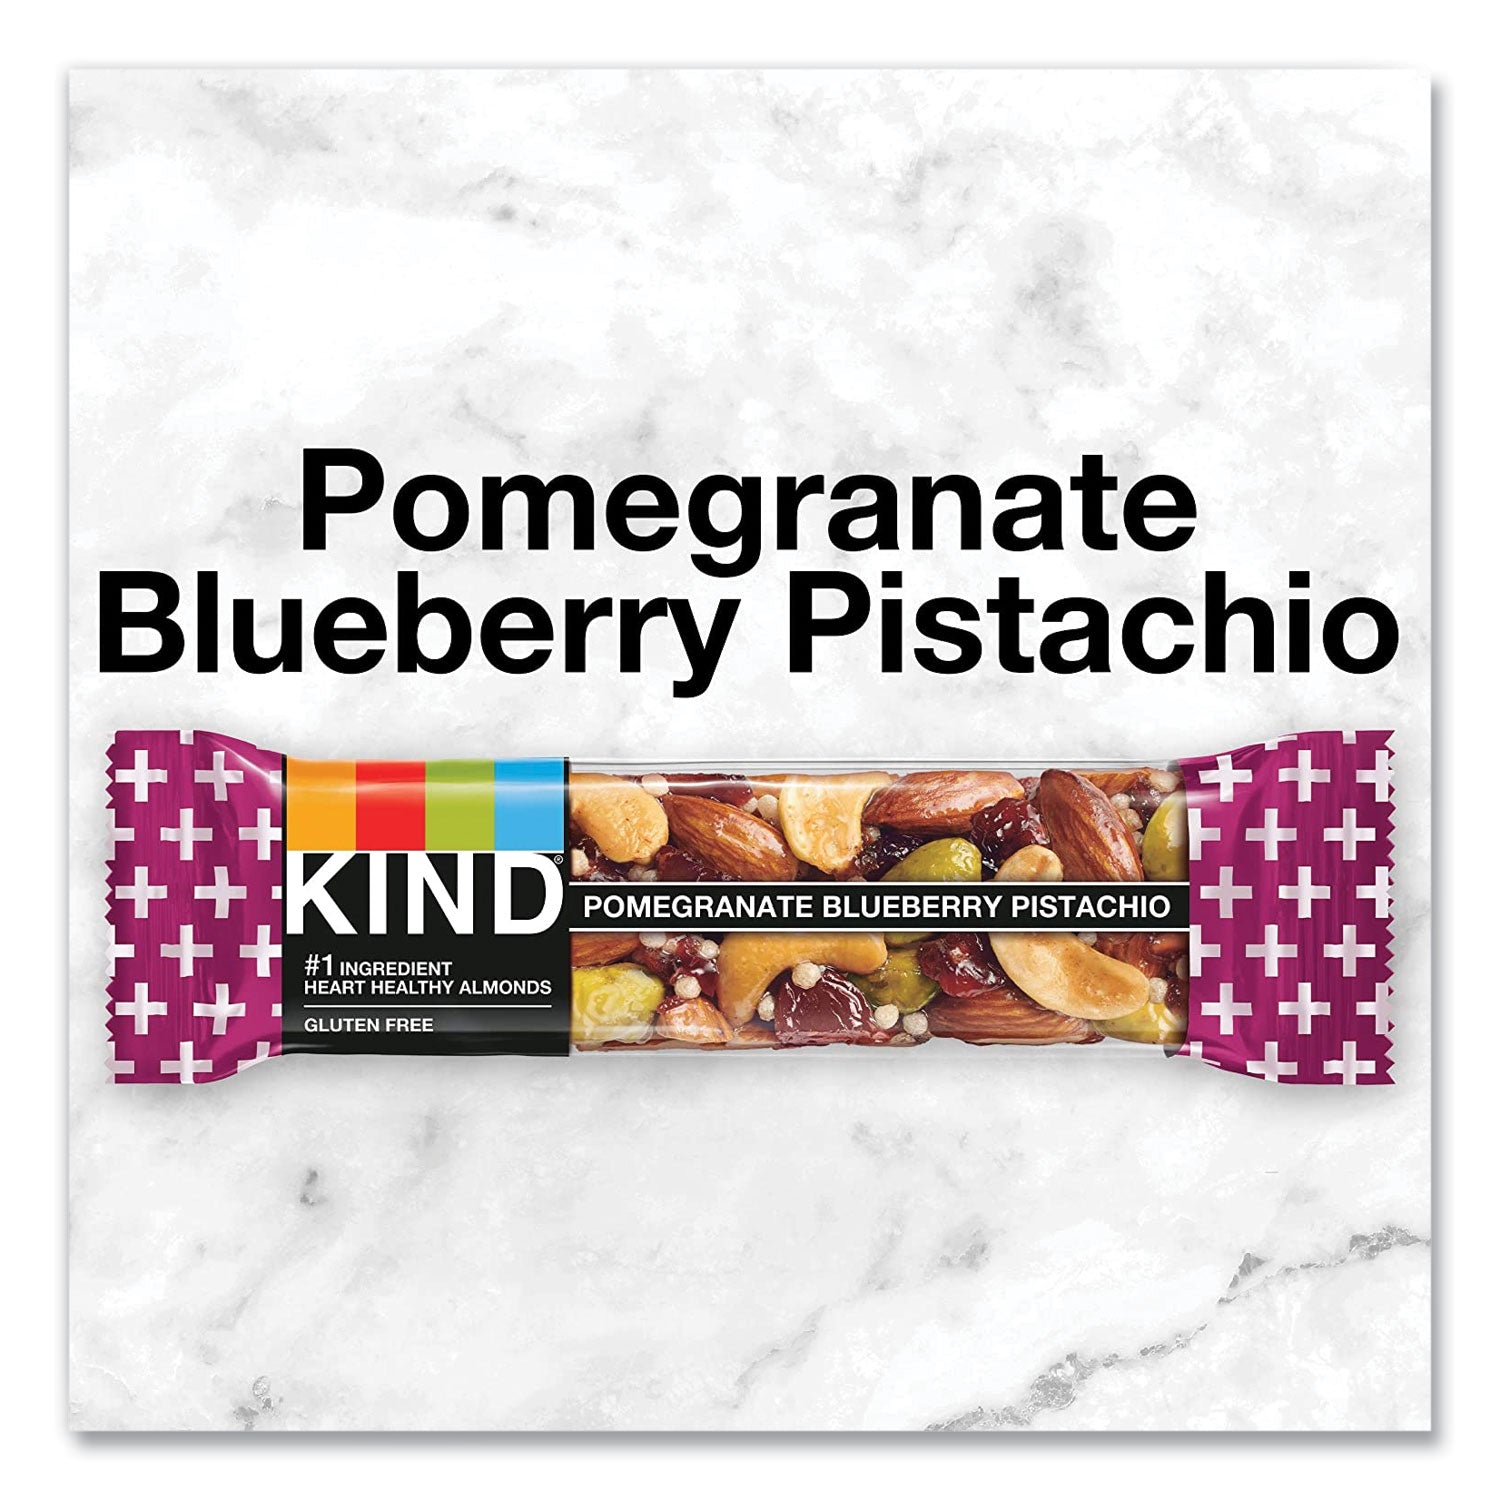 plus-nutrition-boost-bar-pom-blueberry-pistachio-antioxidants-14-oz-12-box_knd17221 - 2